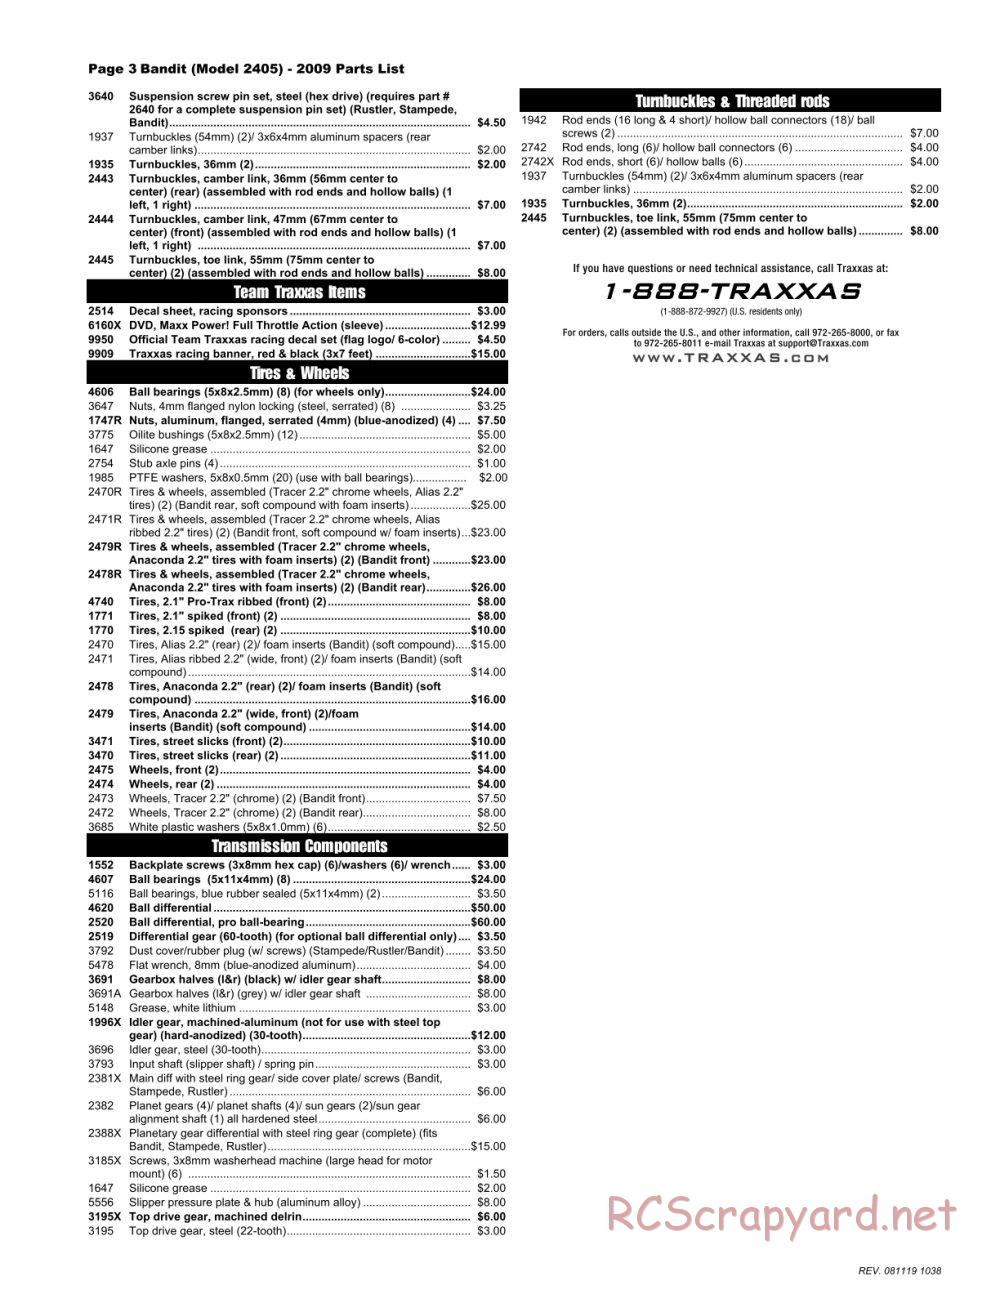 Traxxas - Bandit XL-5 - Parts List - Page 3